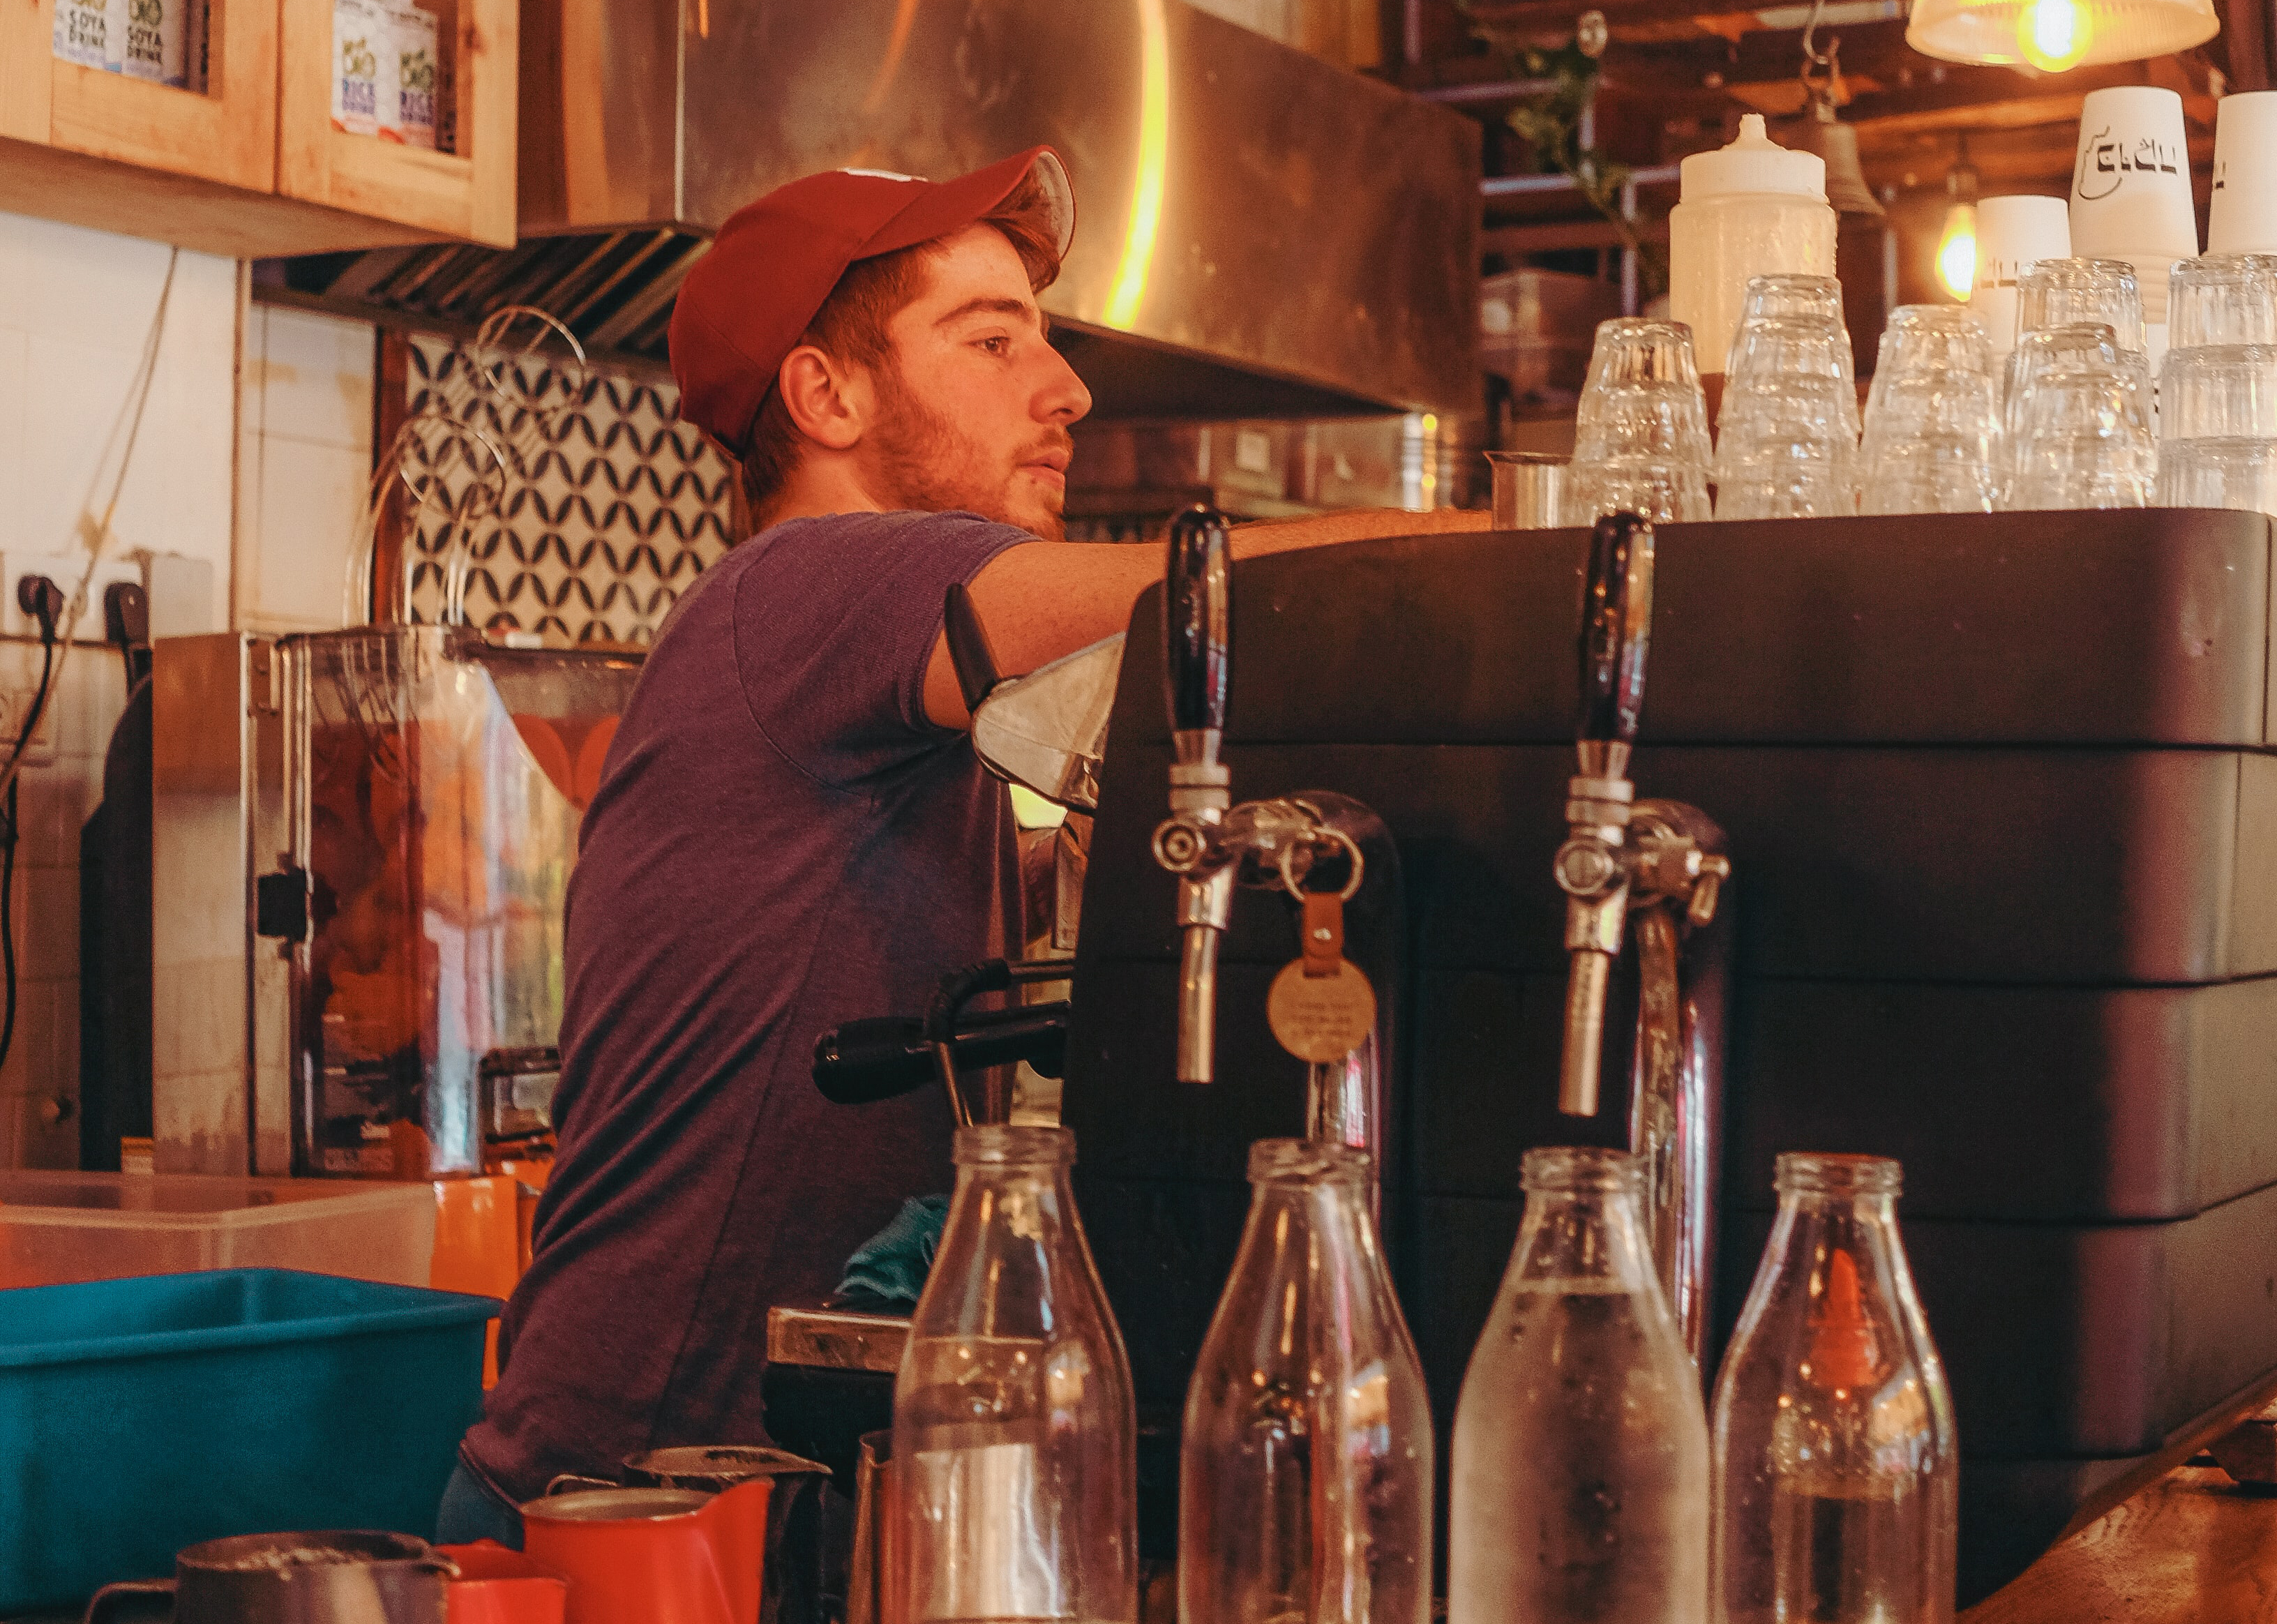 Young man barista working behind bar at coffee shop